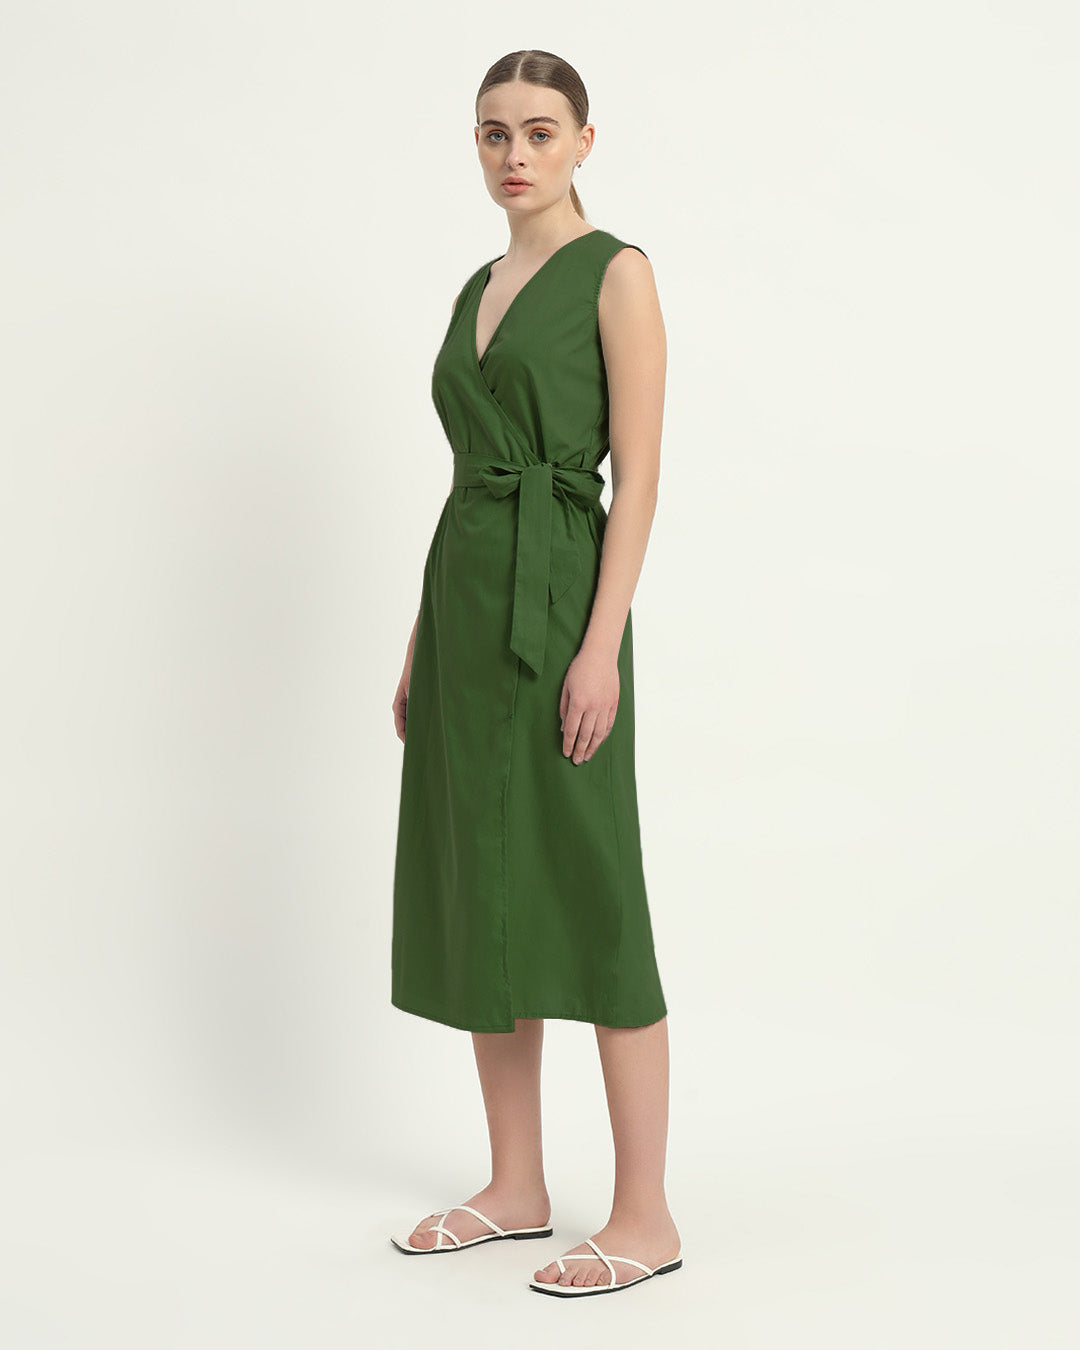 The Windsor Emerald Cotton Dress